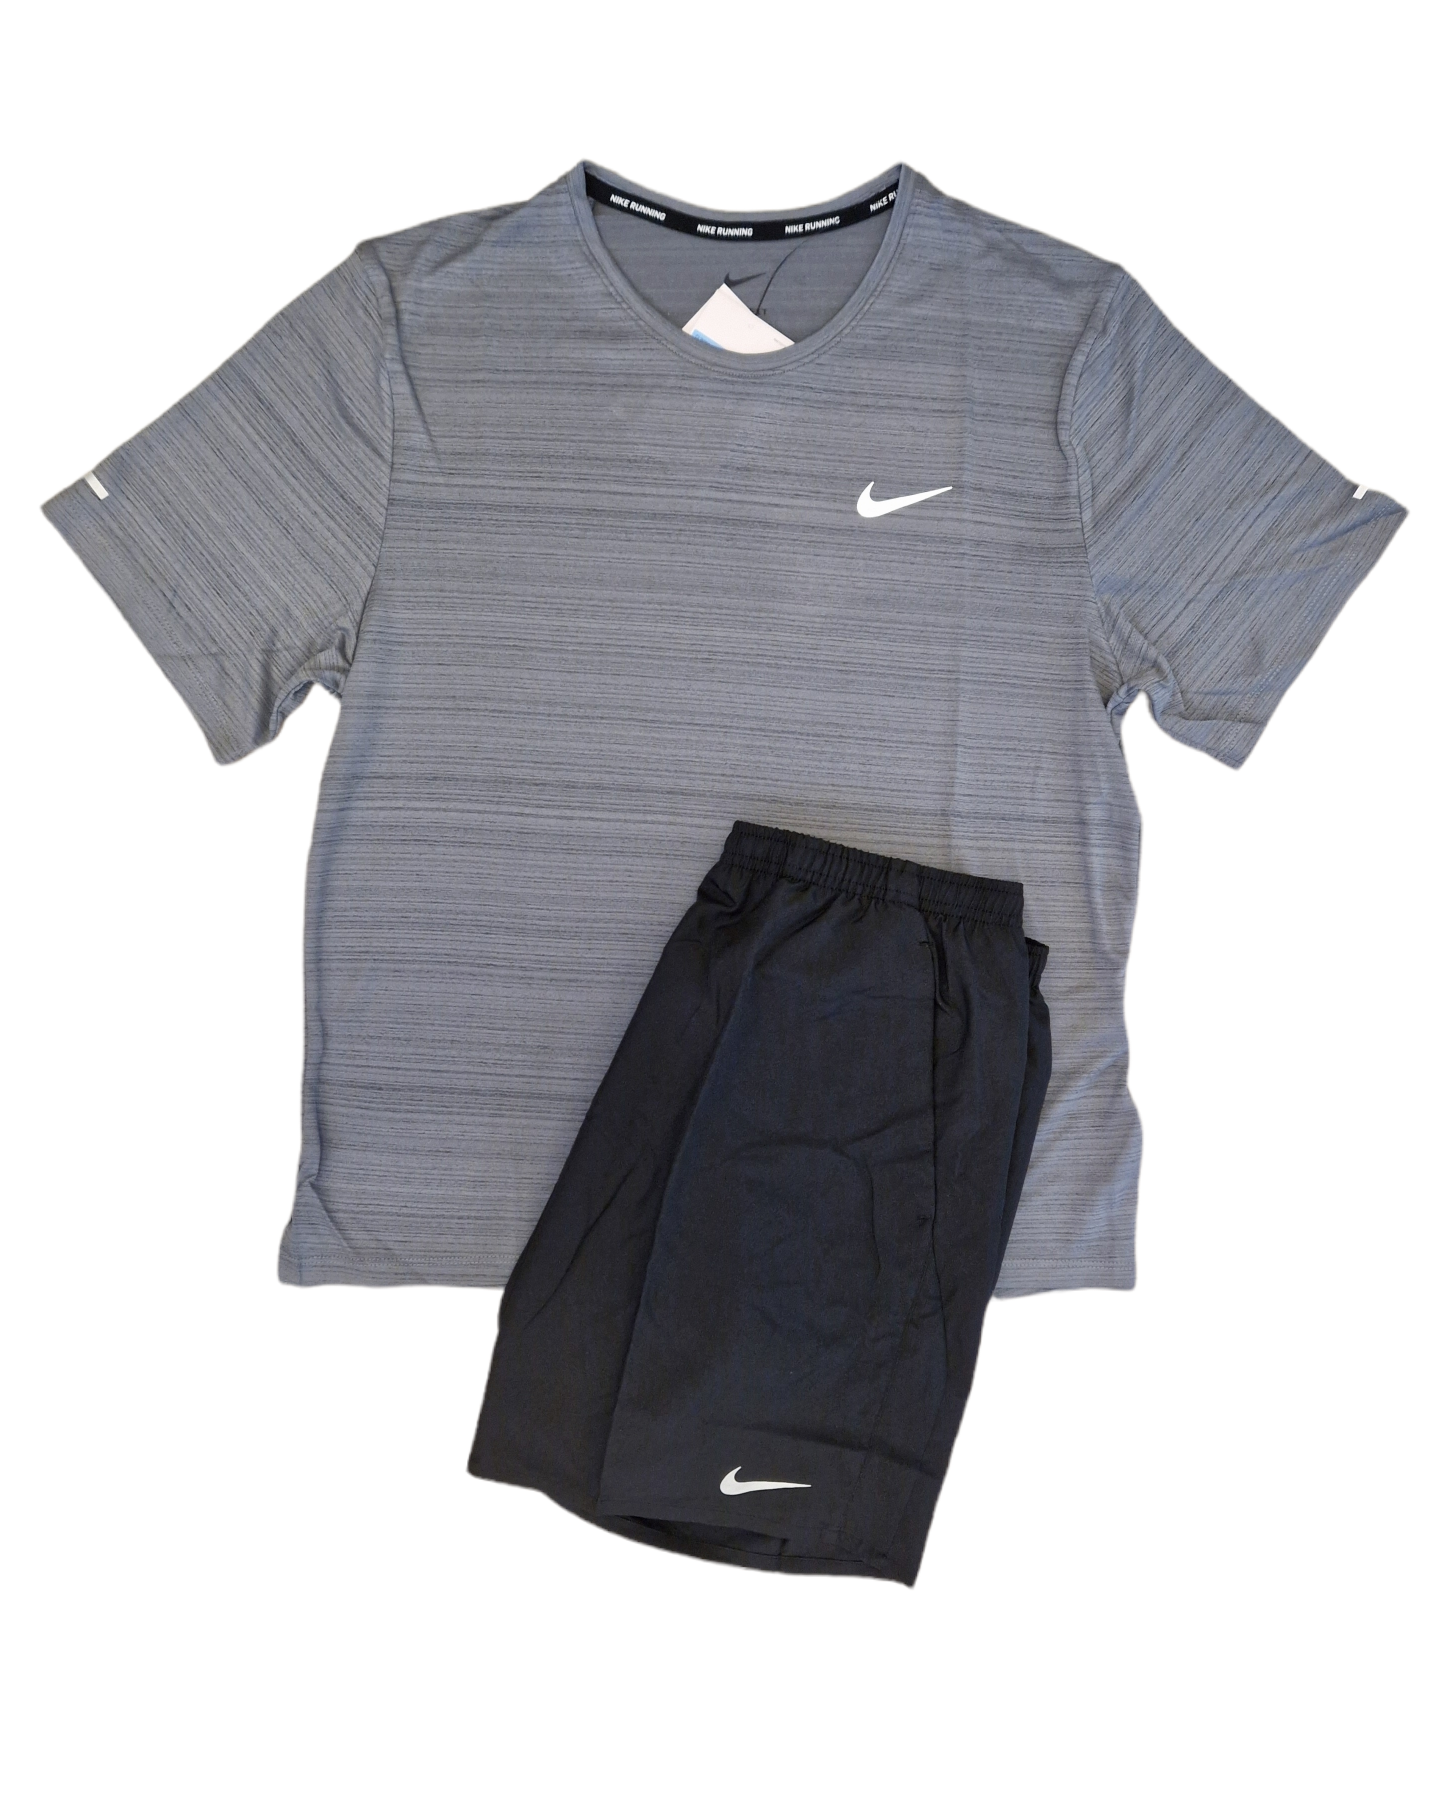 Nike Dri Fit Shorts Set Grey/Black